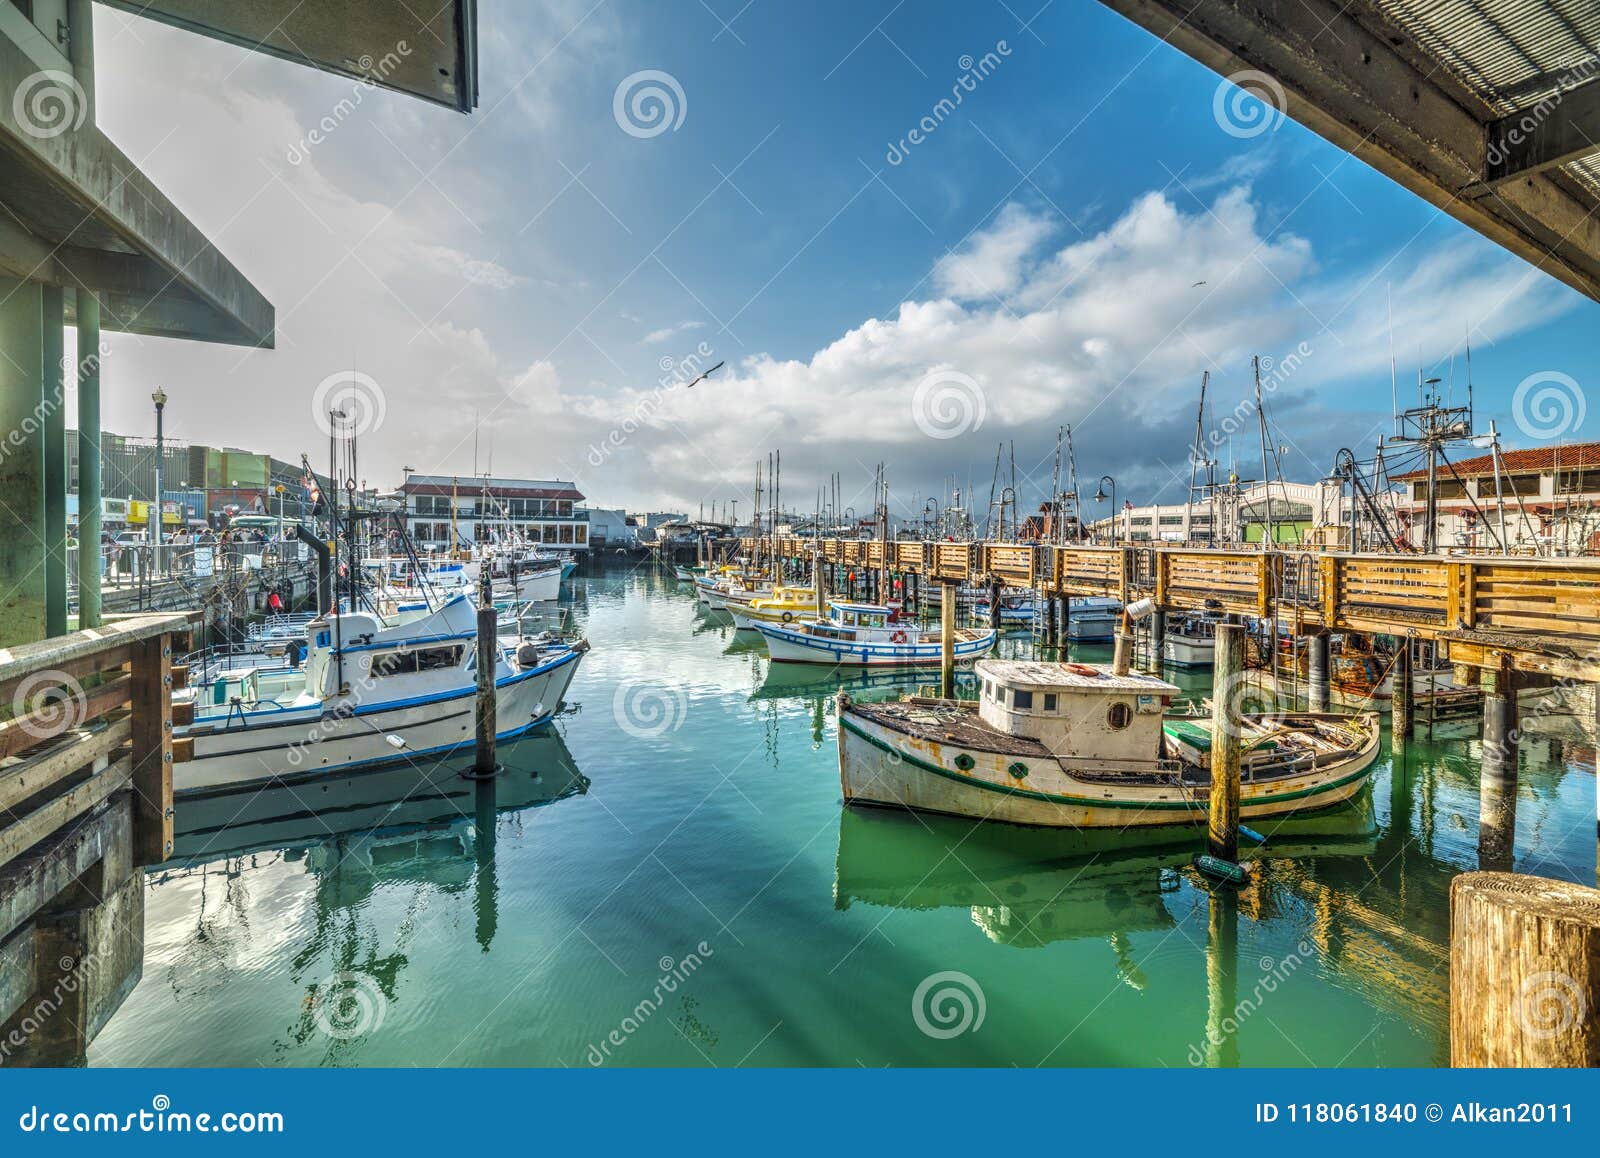 boats in fisherman`s wharf in san francisco